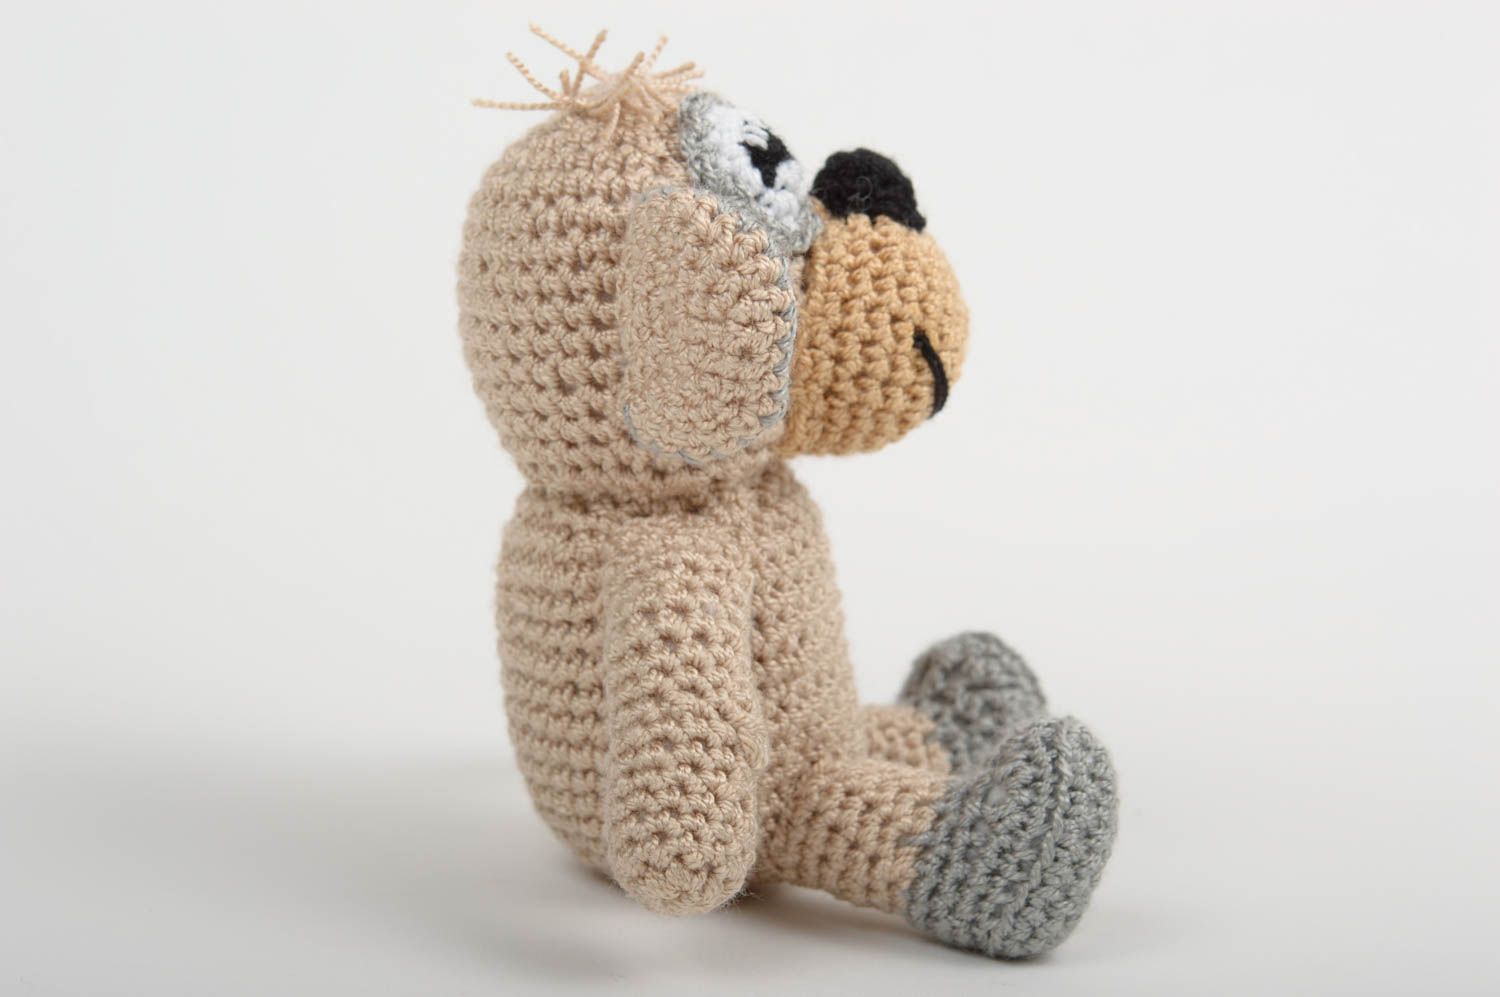 Handmade toy crochet stuffed animals nursery decor gift ideas for kids photo 2